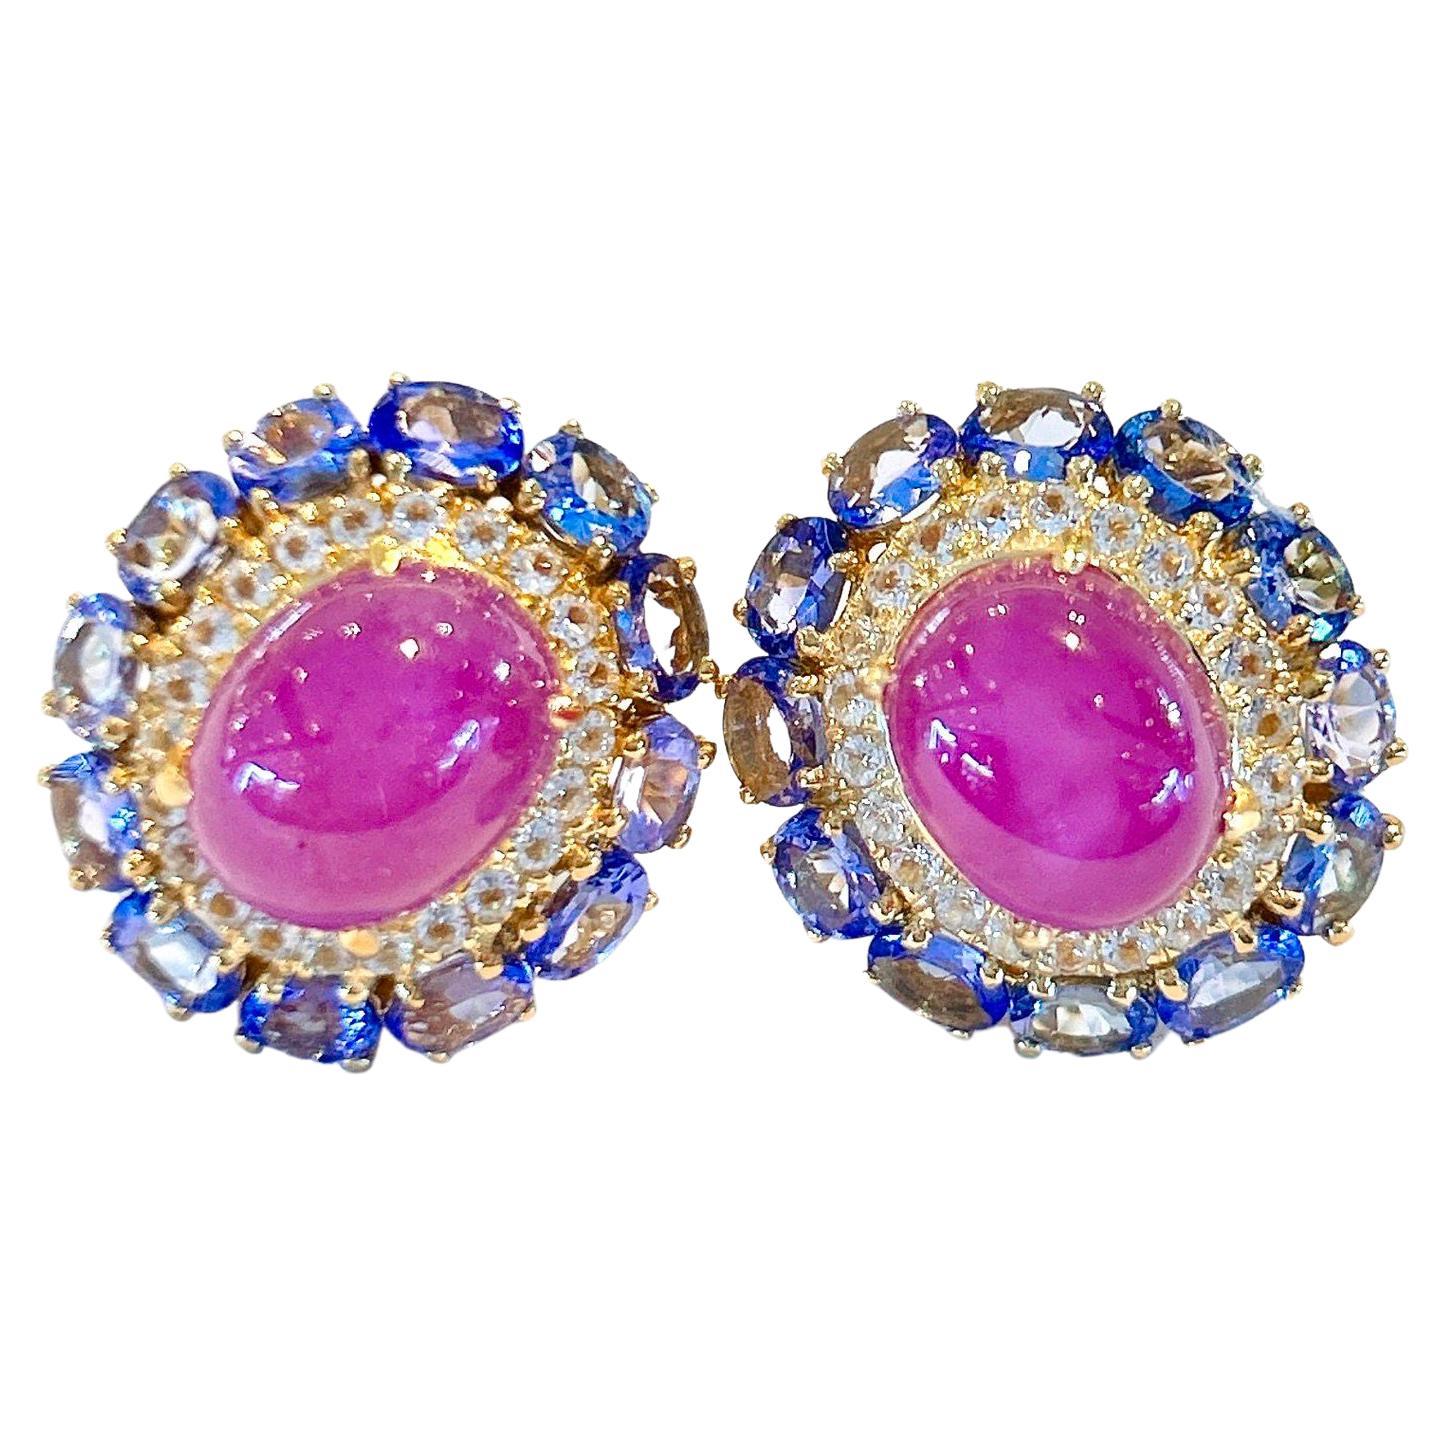 Bochic “Capri” Natural Ruby & Tanzanite Earrings Set in 22k Gold & Silver